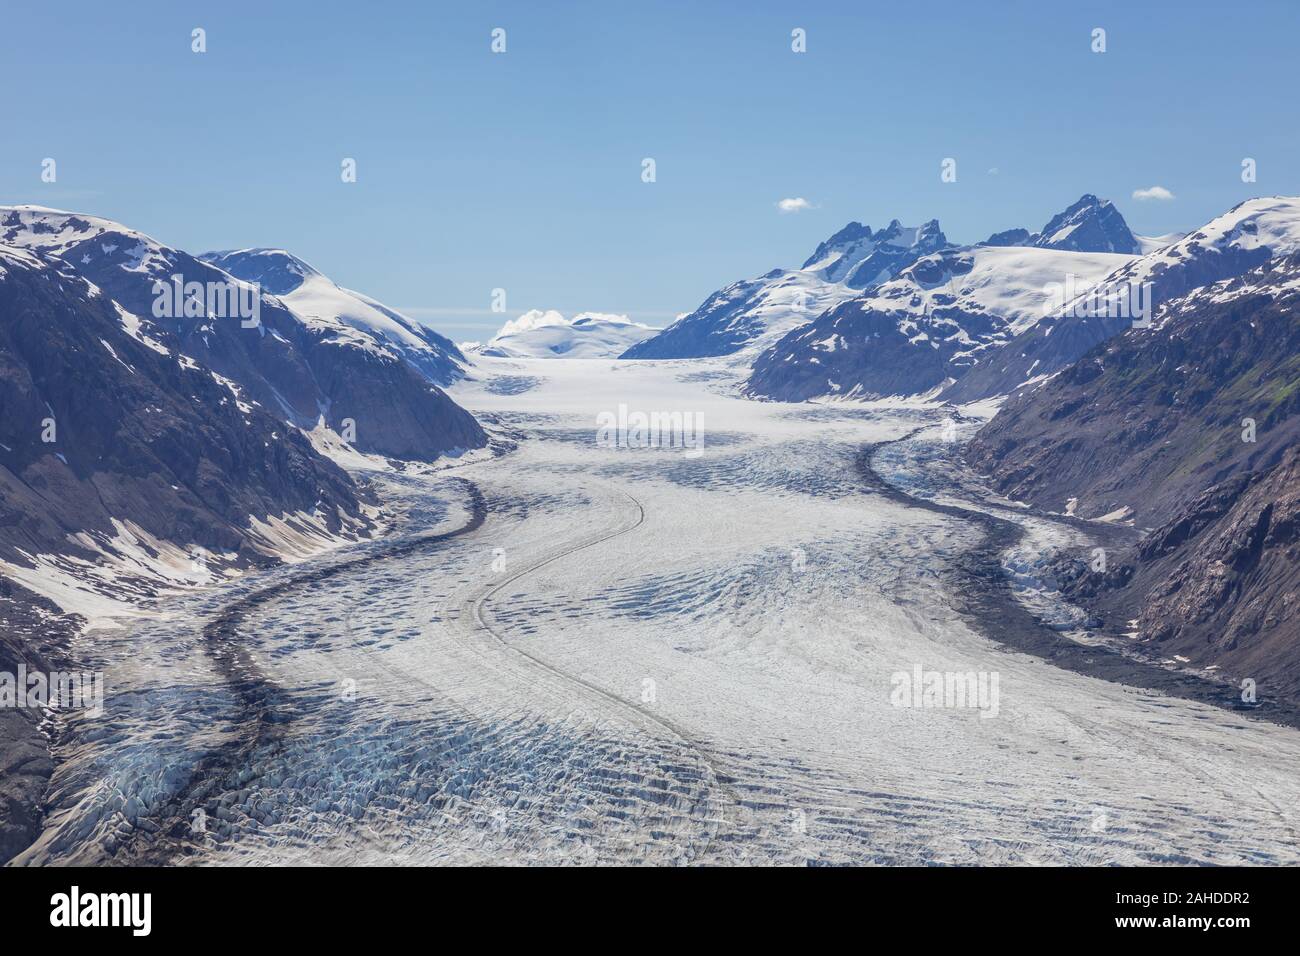 Scenery of Salmon Glacier ablating rocks, Alaska, USA Stock Photo